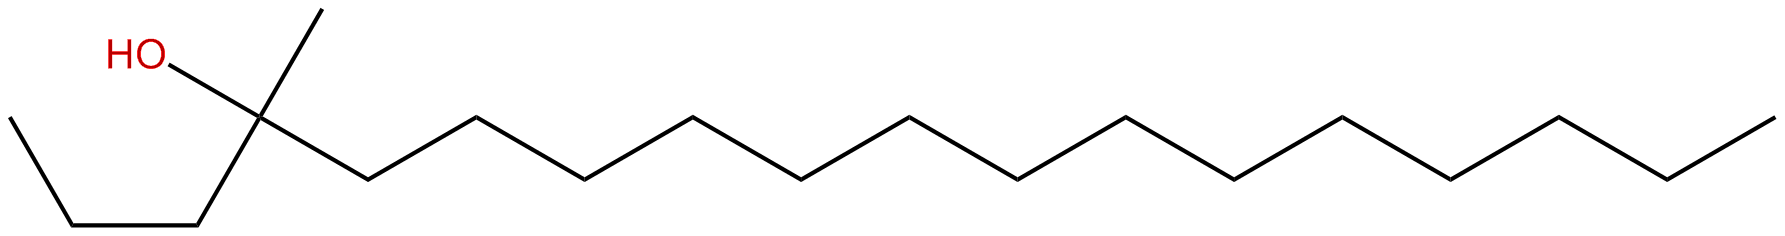 Image of 4-methyl-4-octadecanol